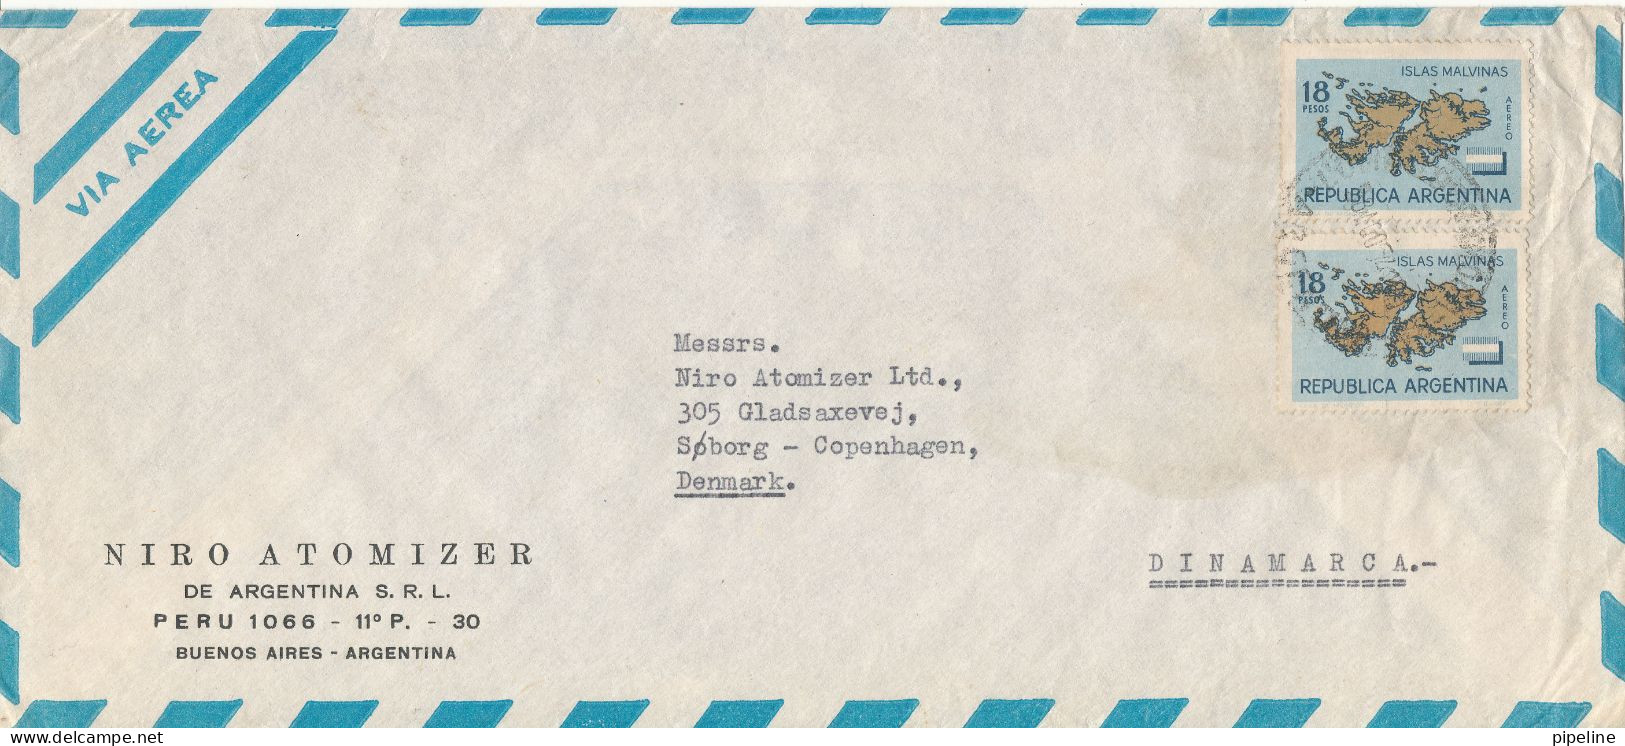 Argentina Air Mail Cover Sent To Denmark 28-8-1964 - Poste Aérienne